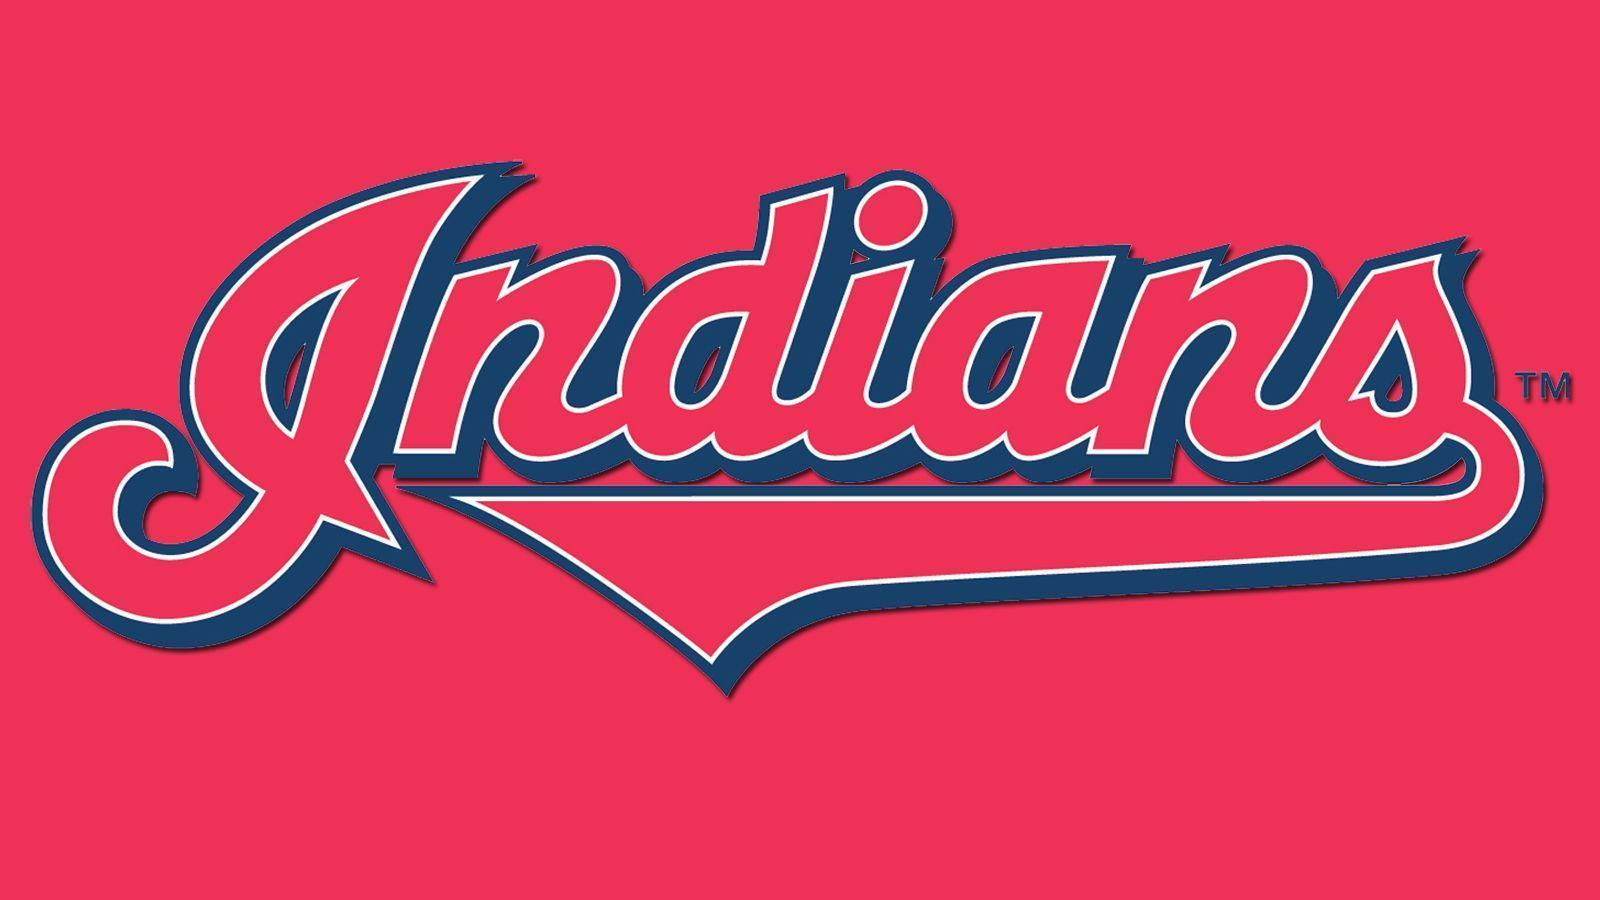 Cleveland Indians Wallpaper. Cleveland Indians. Places to Visit